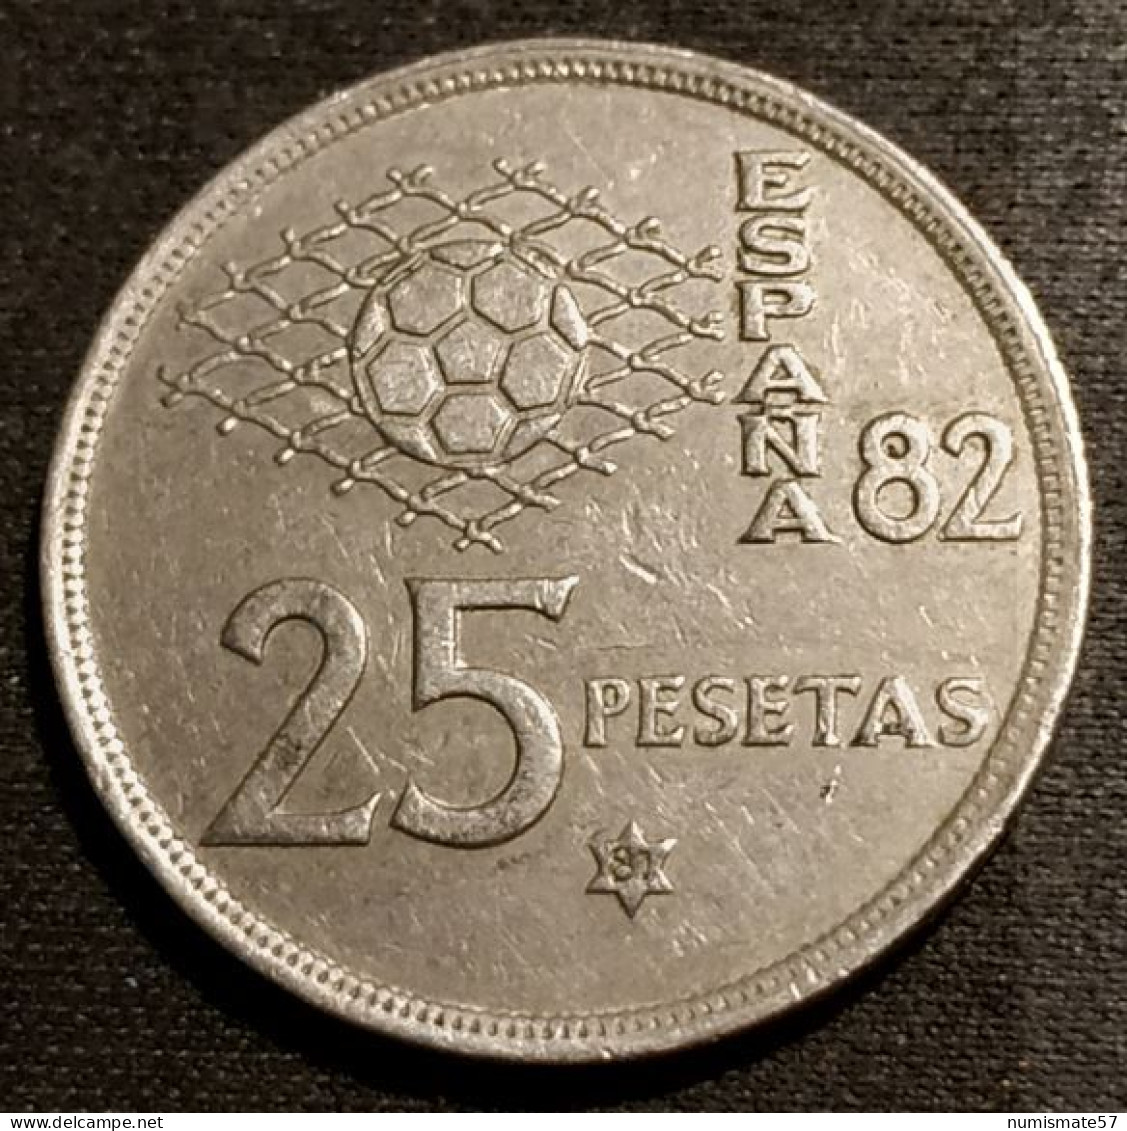 ESPAGNE - ESPANA - SPAIN - 25 PESETAS 1980 - España 82 - KM 818 - Coupe Du Monde De Football - "81" On Star - 25 Pesetas